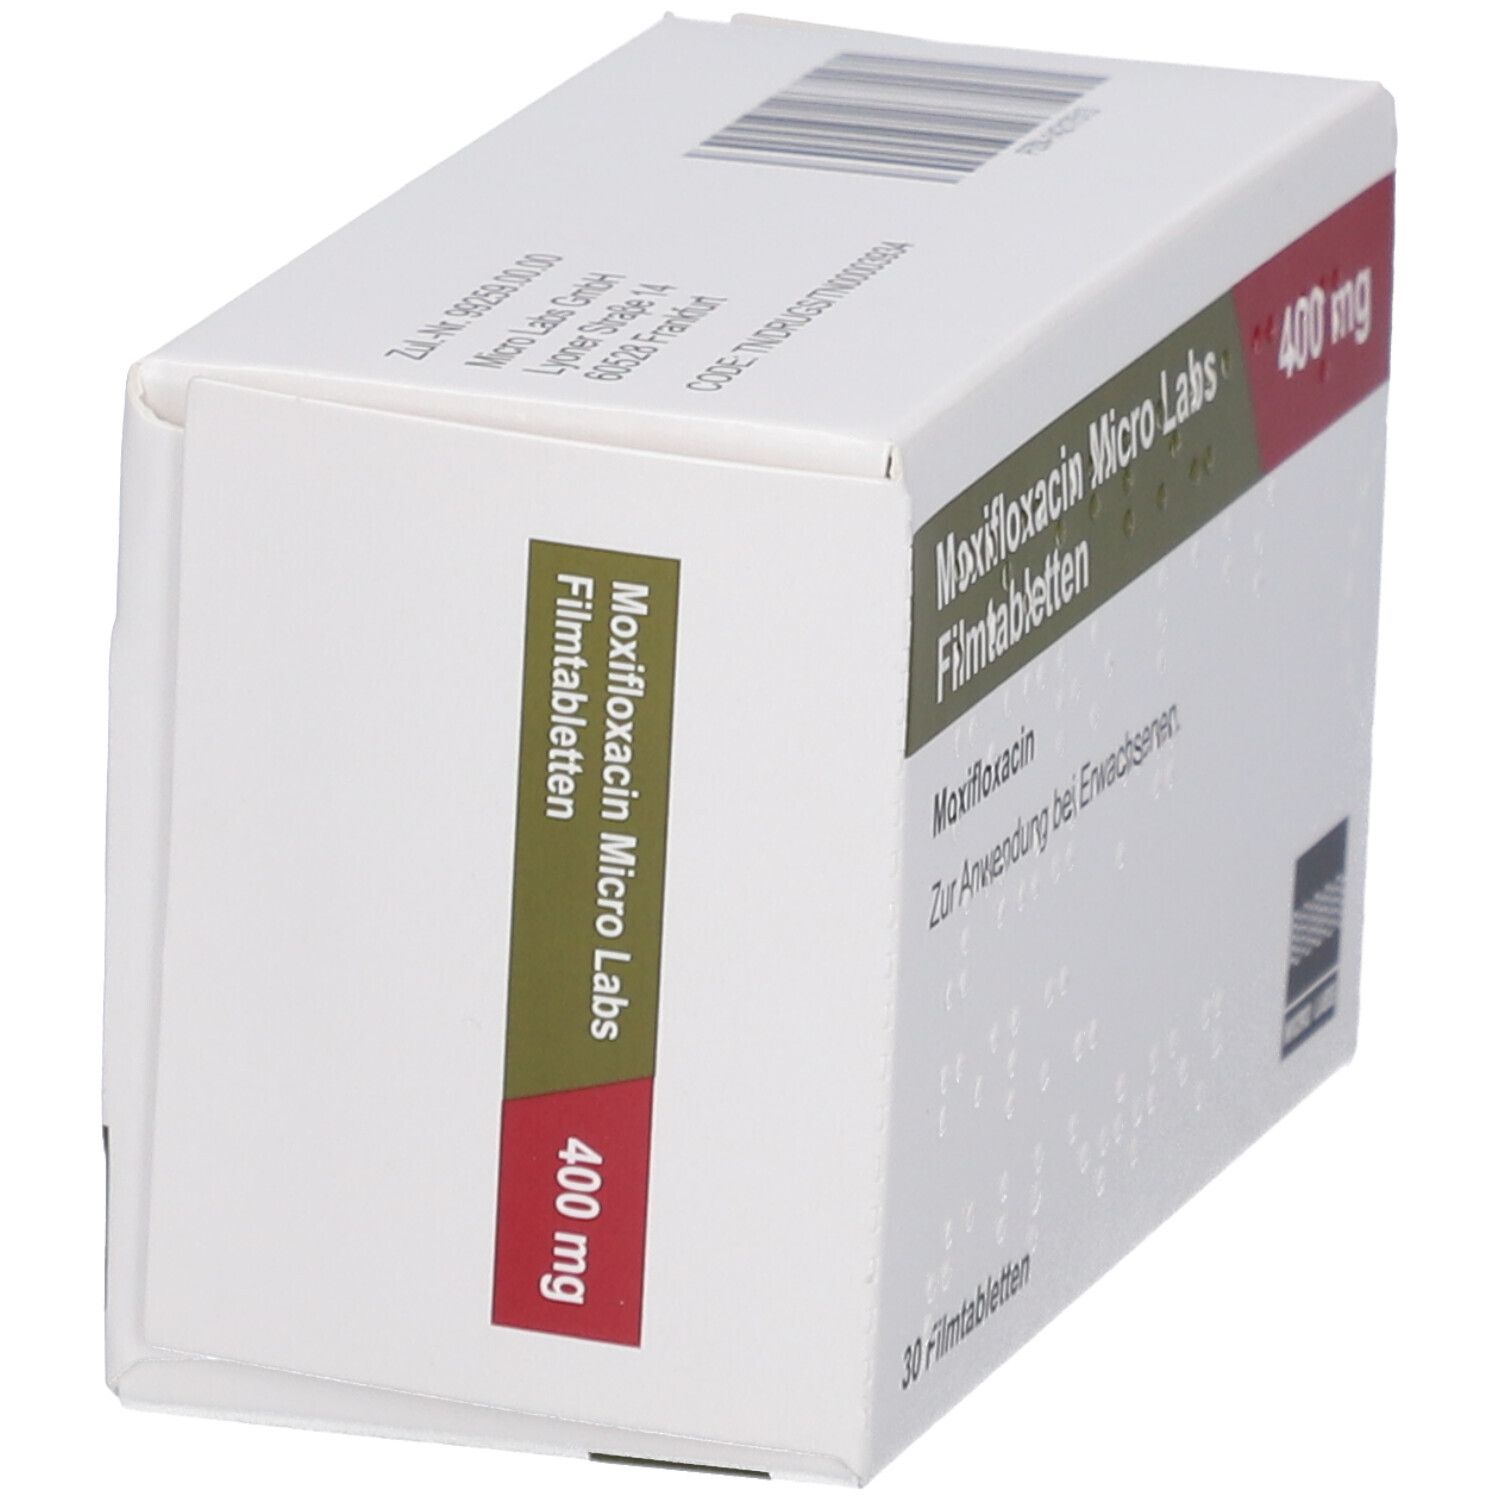 Moxifloxacin Micro Labs 400 mg